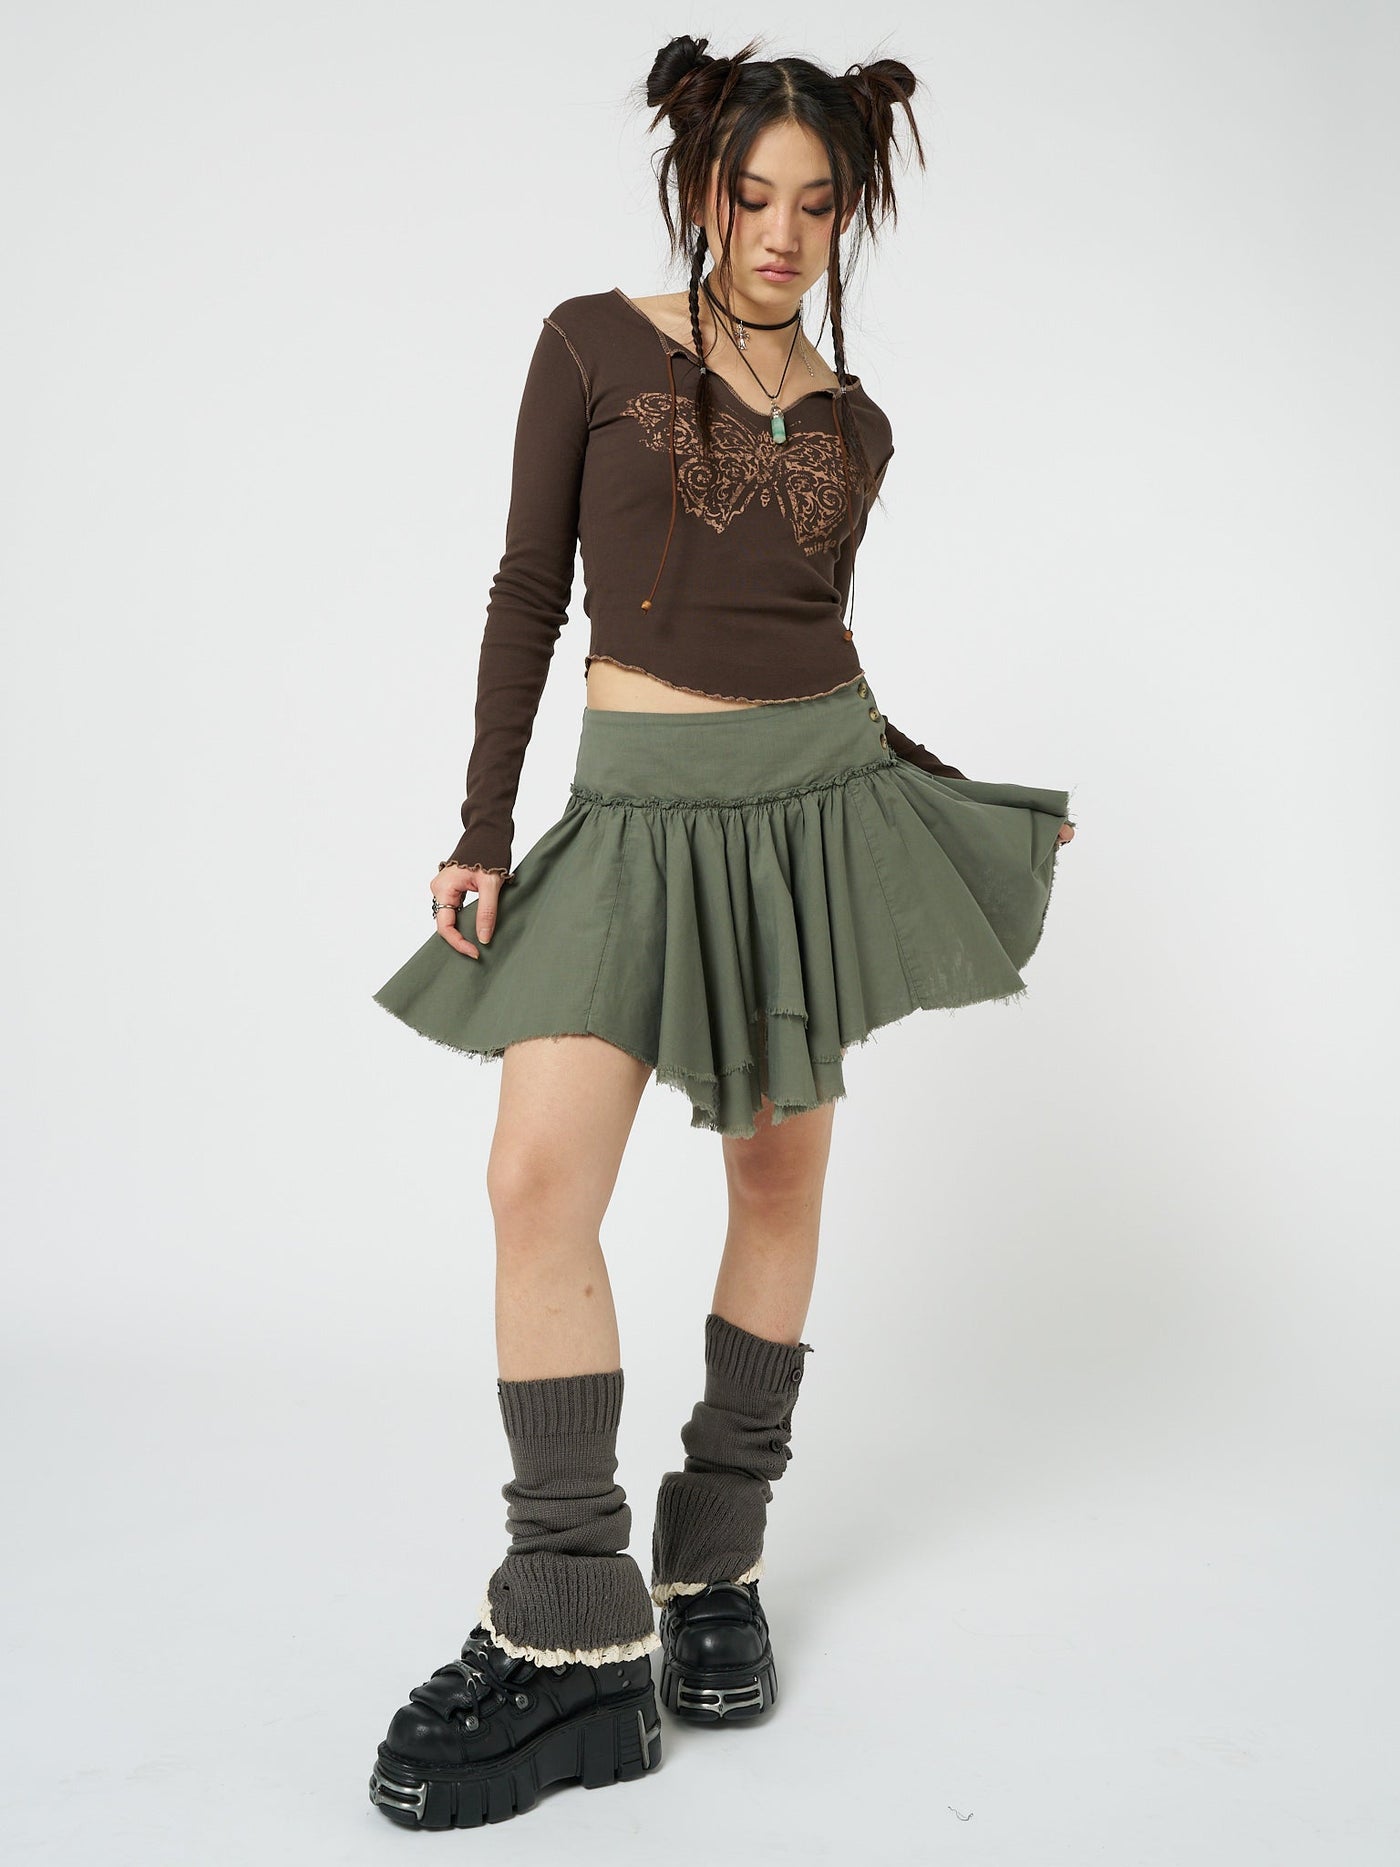 Flora Green Layered Asymmetrical Mini Skirt - Minga  US